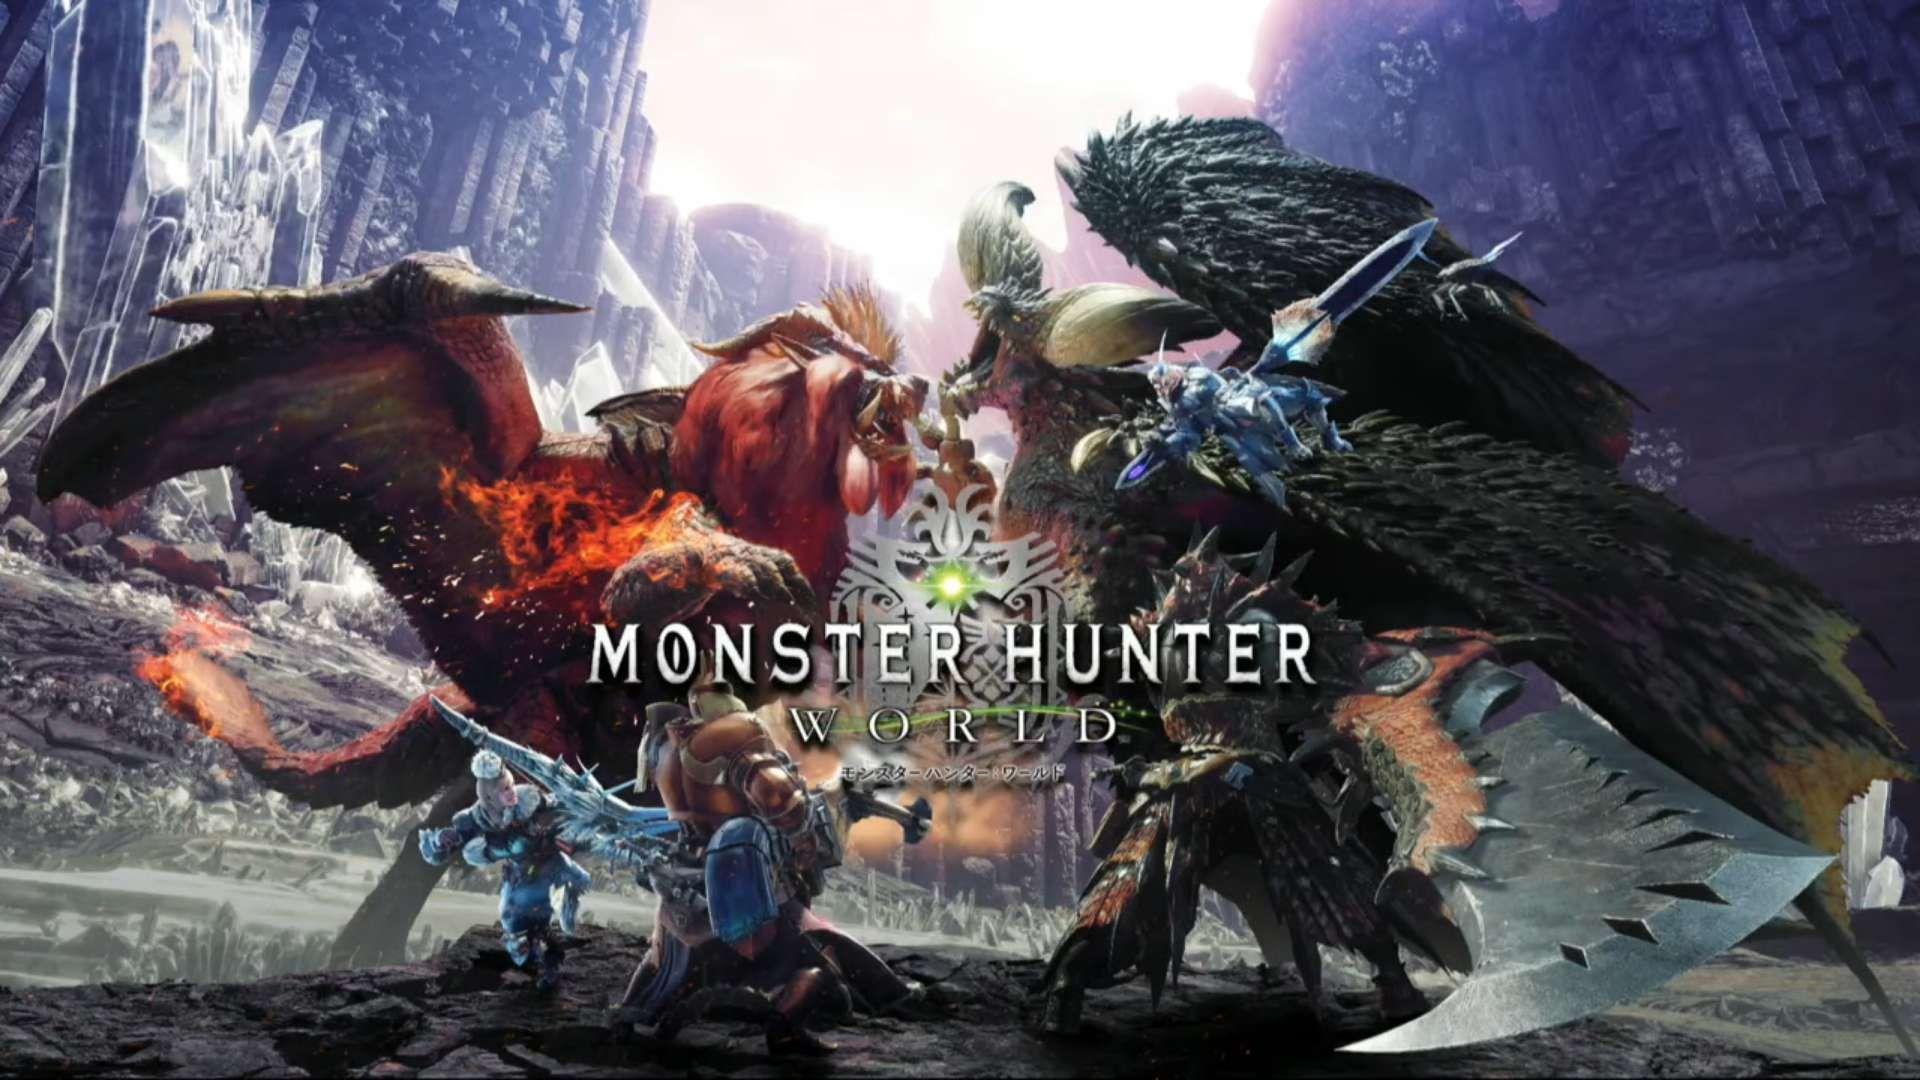 Monster Hunter World Wallpaper Generacion. Monster